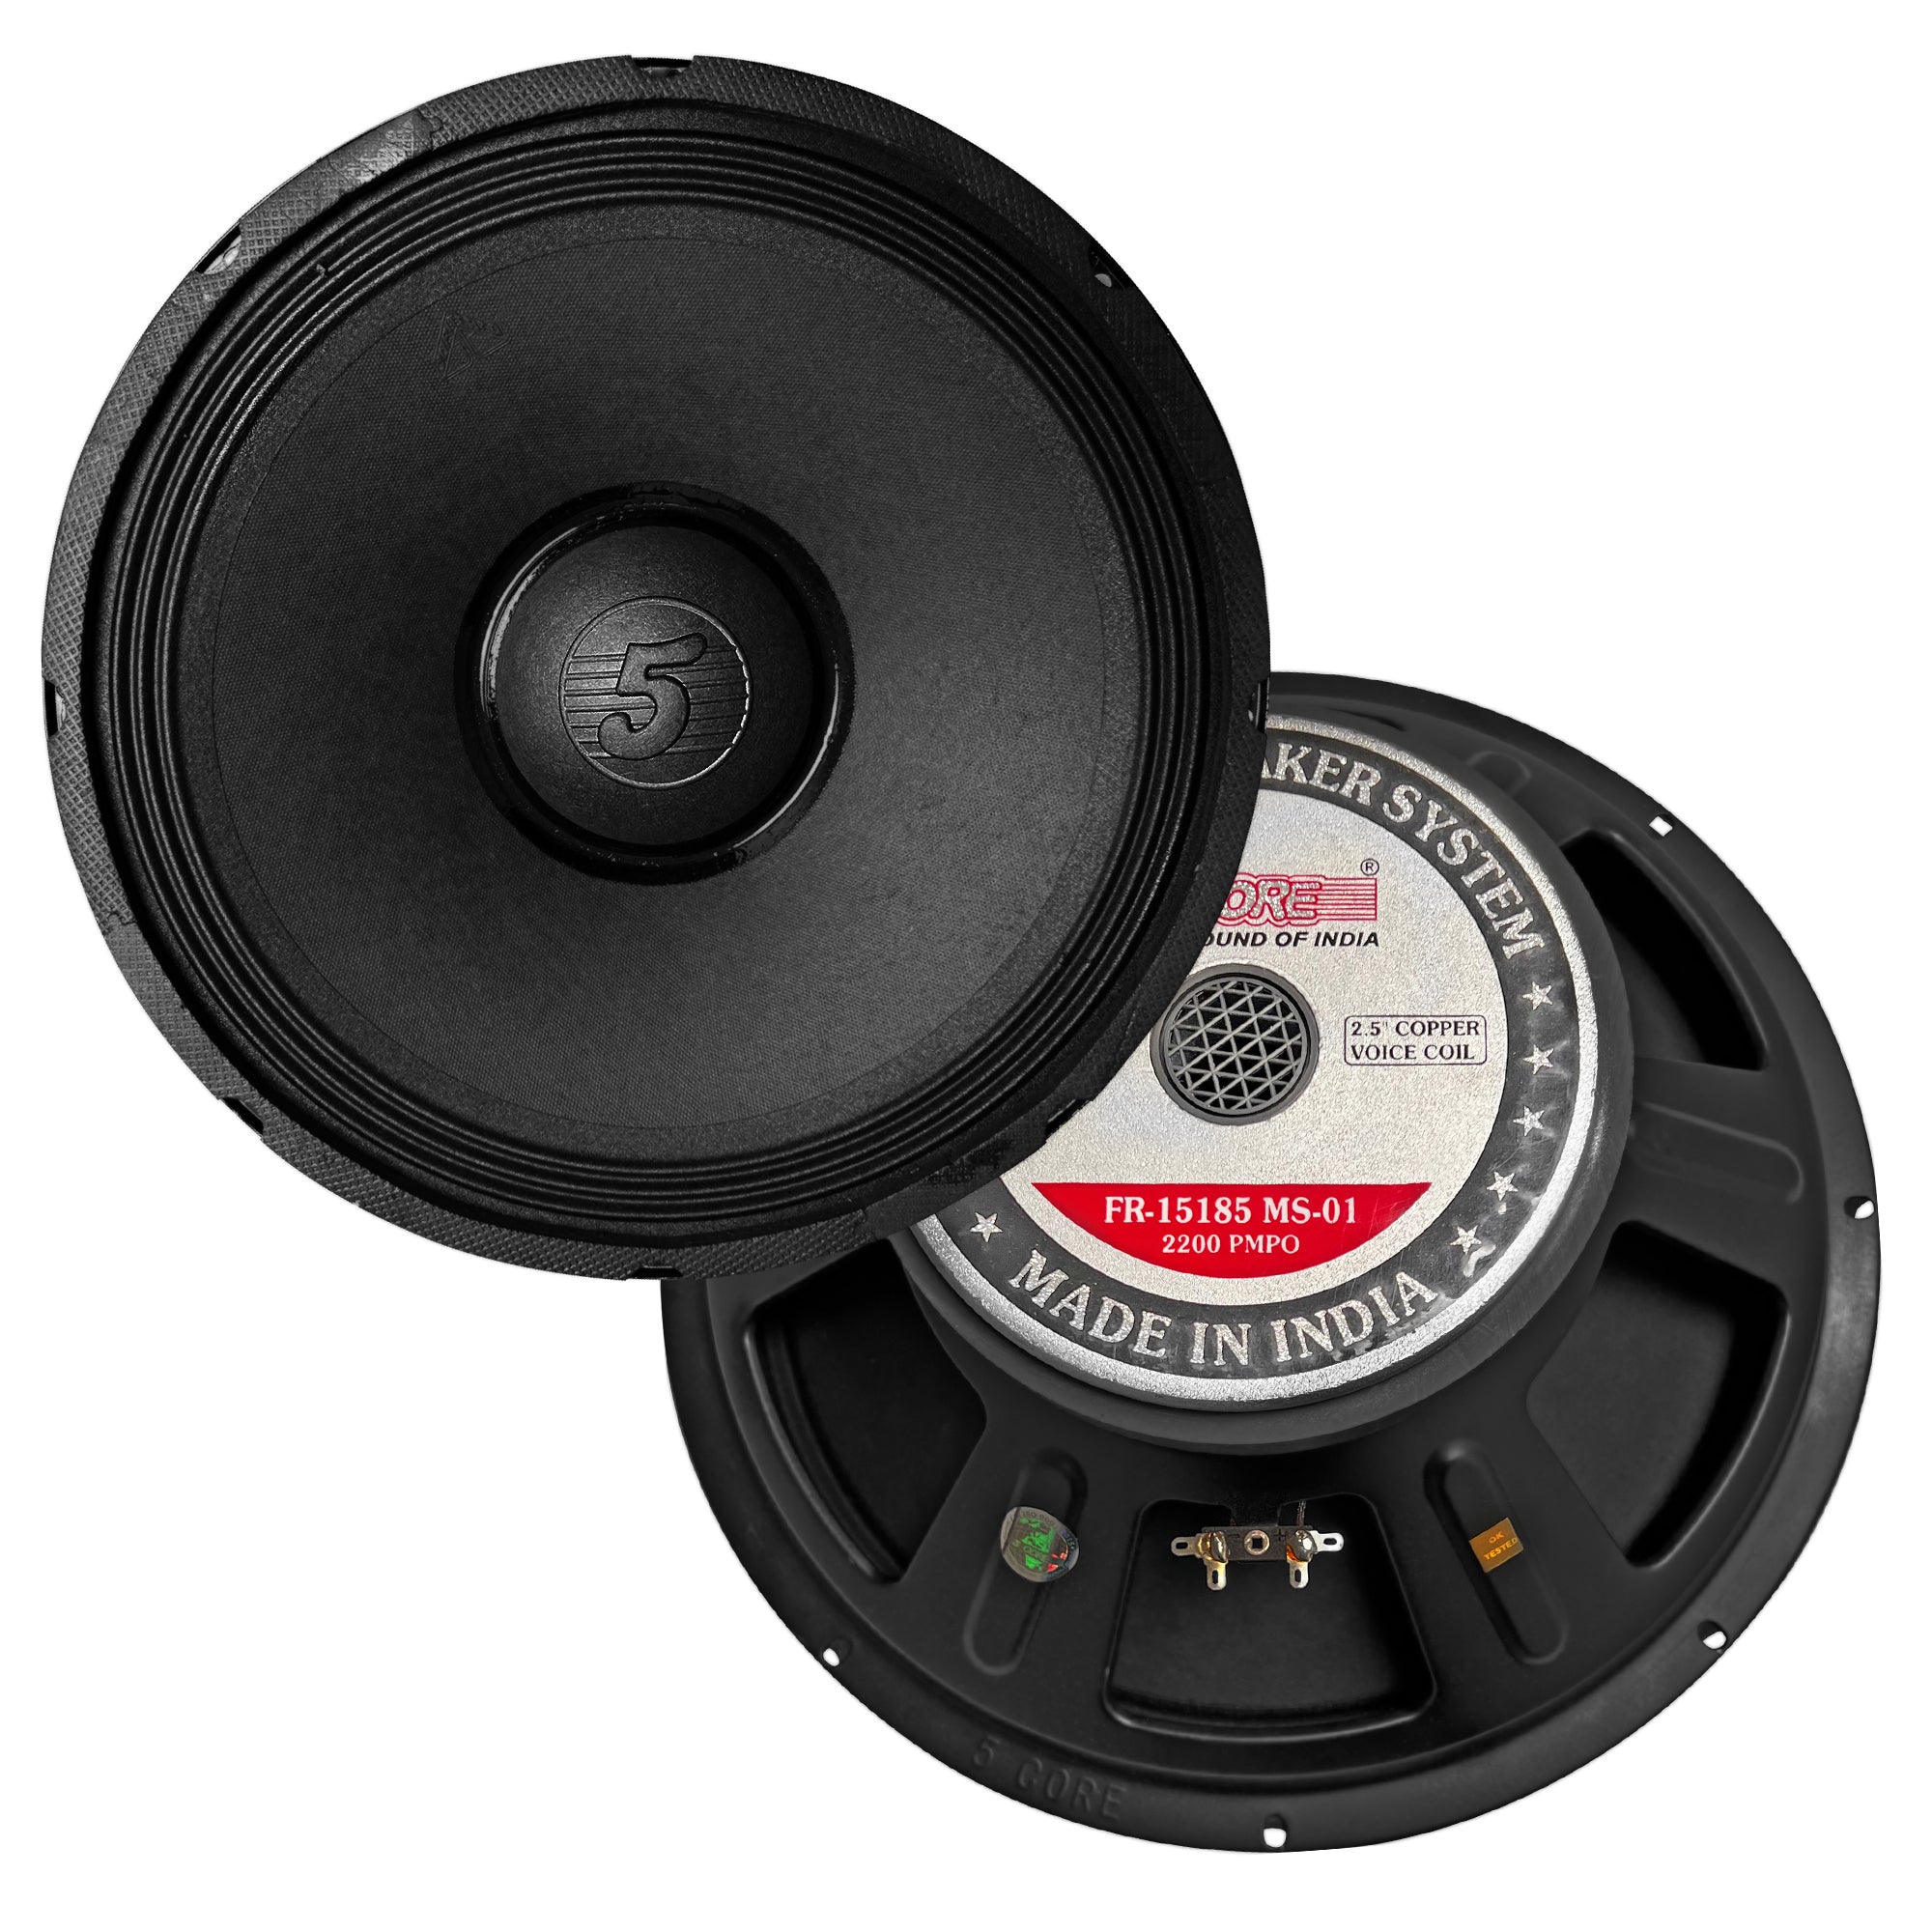 5 Core 15 Inch Subwoofer Speaker 2200W Peak 8 Ohm Replacement DJ Bass Sub Woofer w 90 Oz Magnet